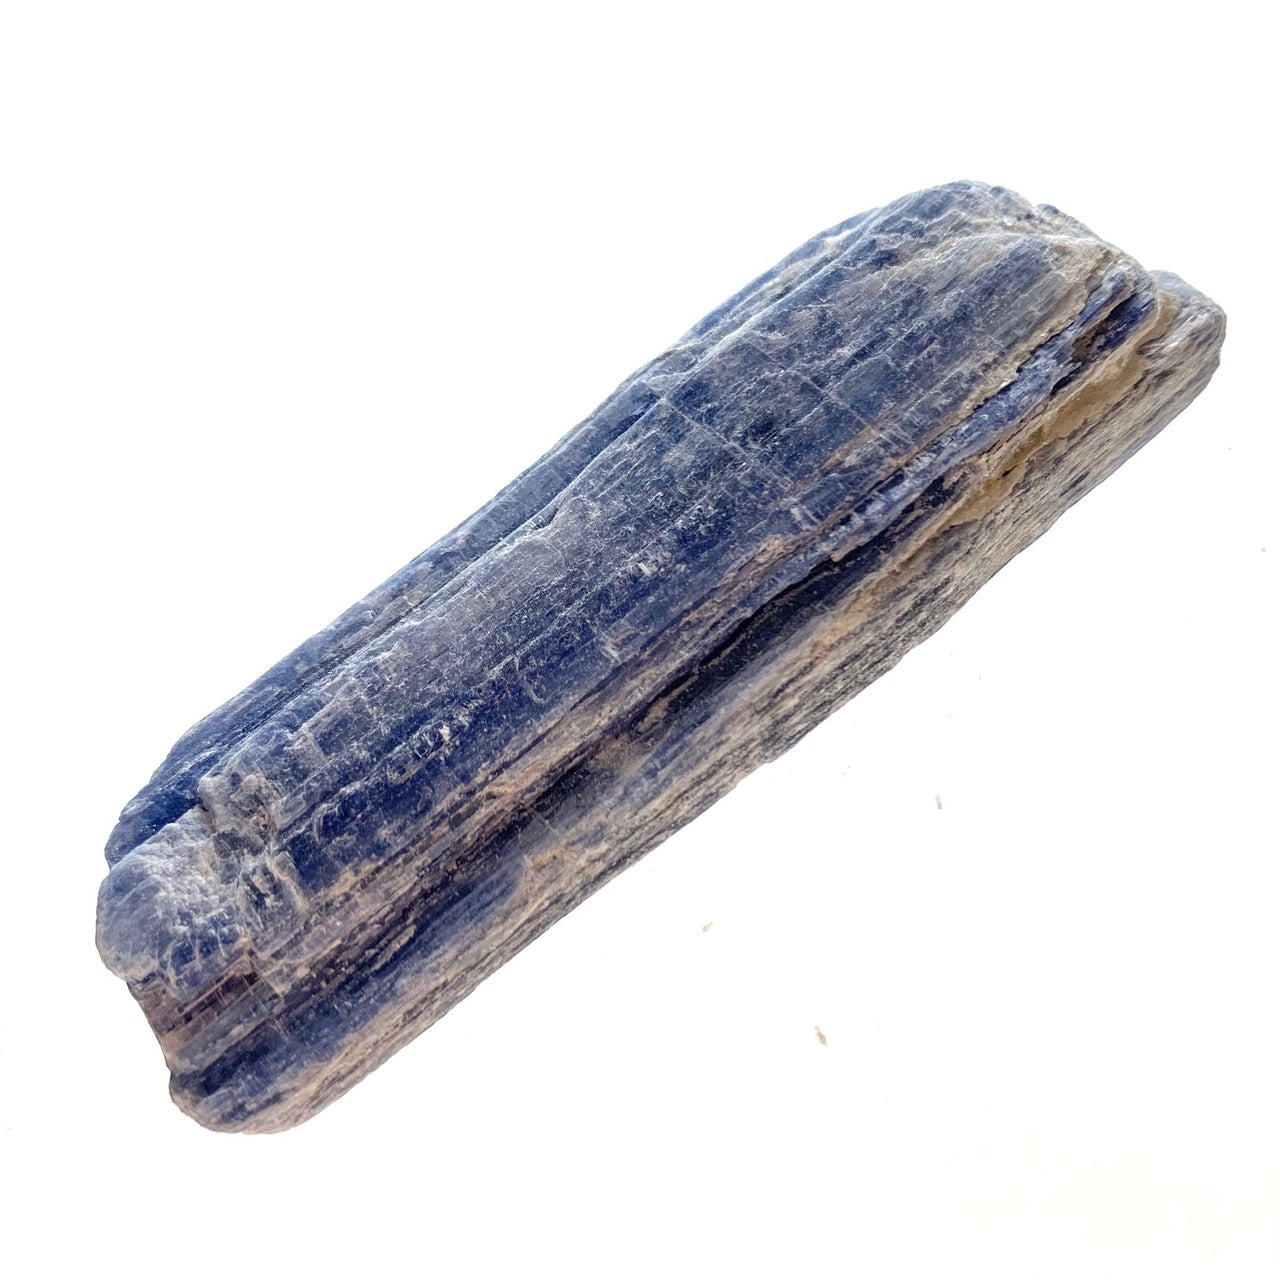 Blue Kyanite "Truth Serum"